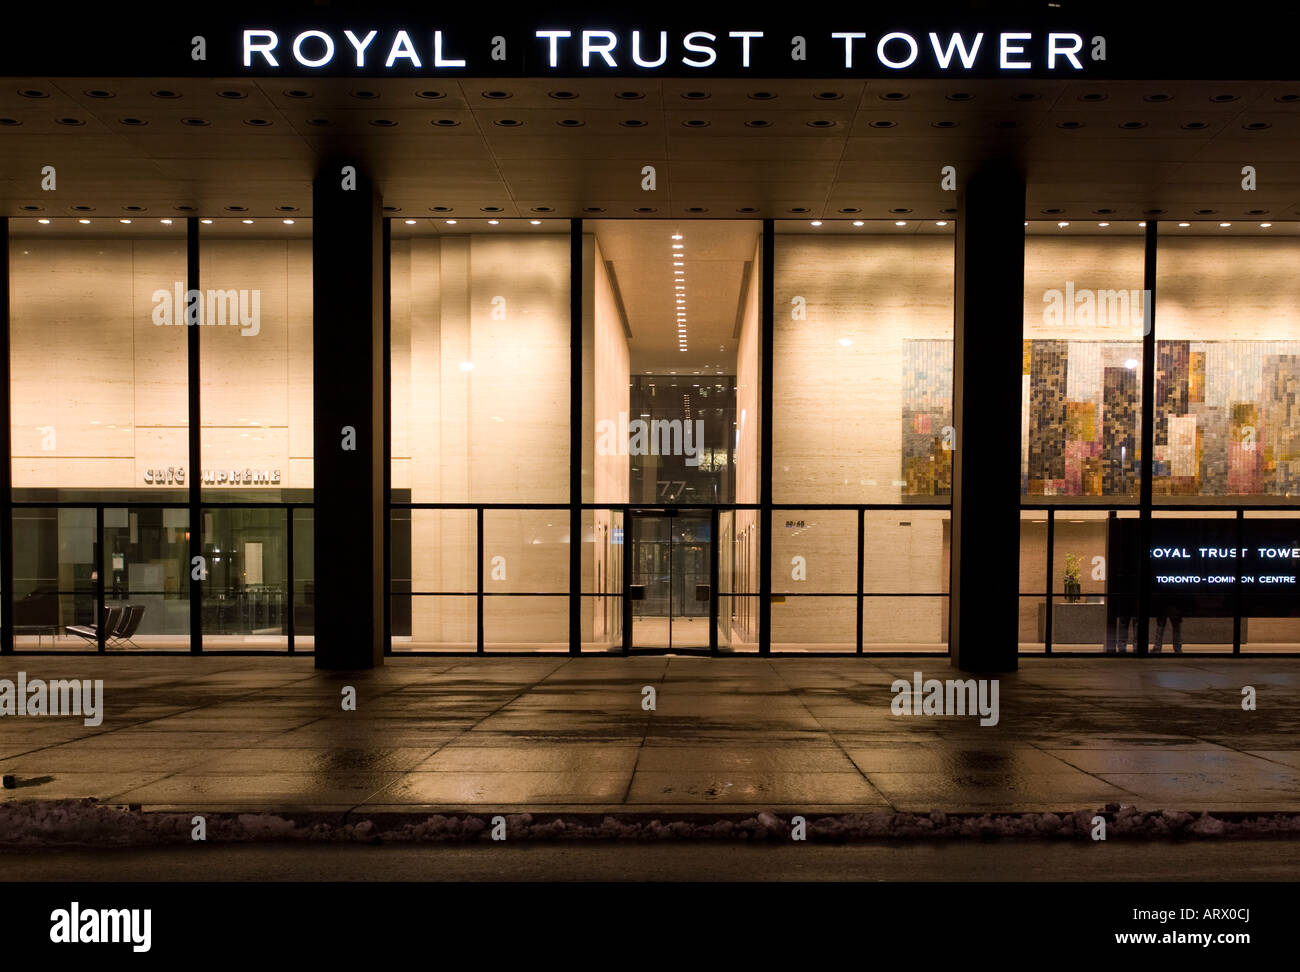 Royal Trust Tower - Toronto - Canada Stock Photo